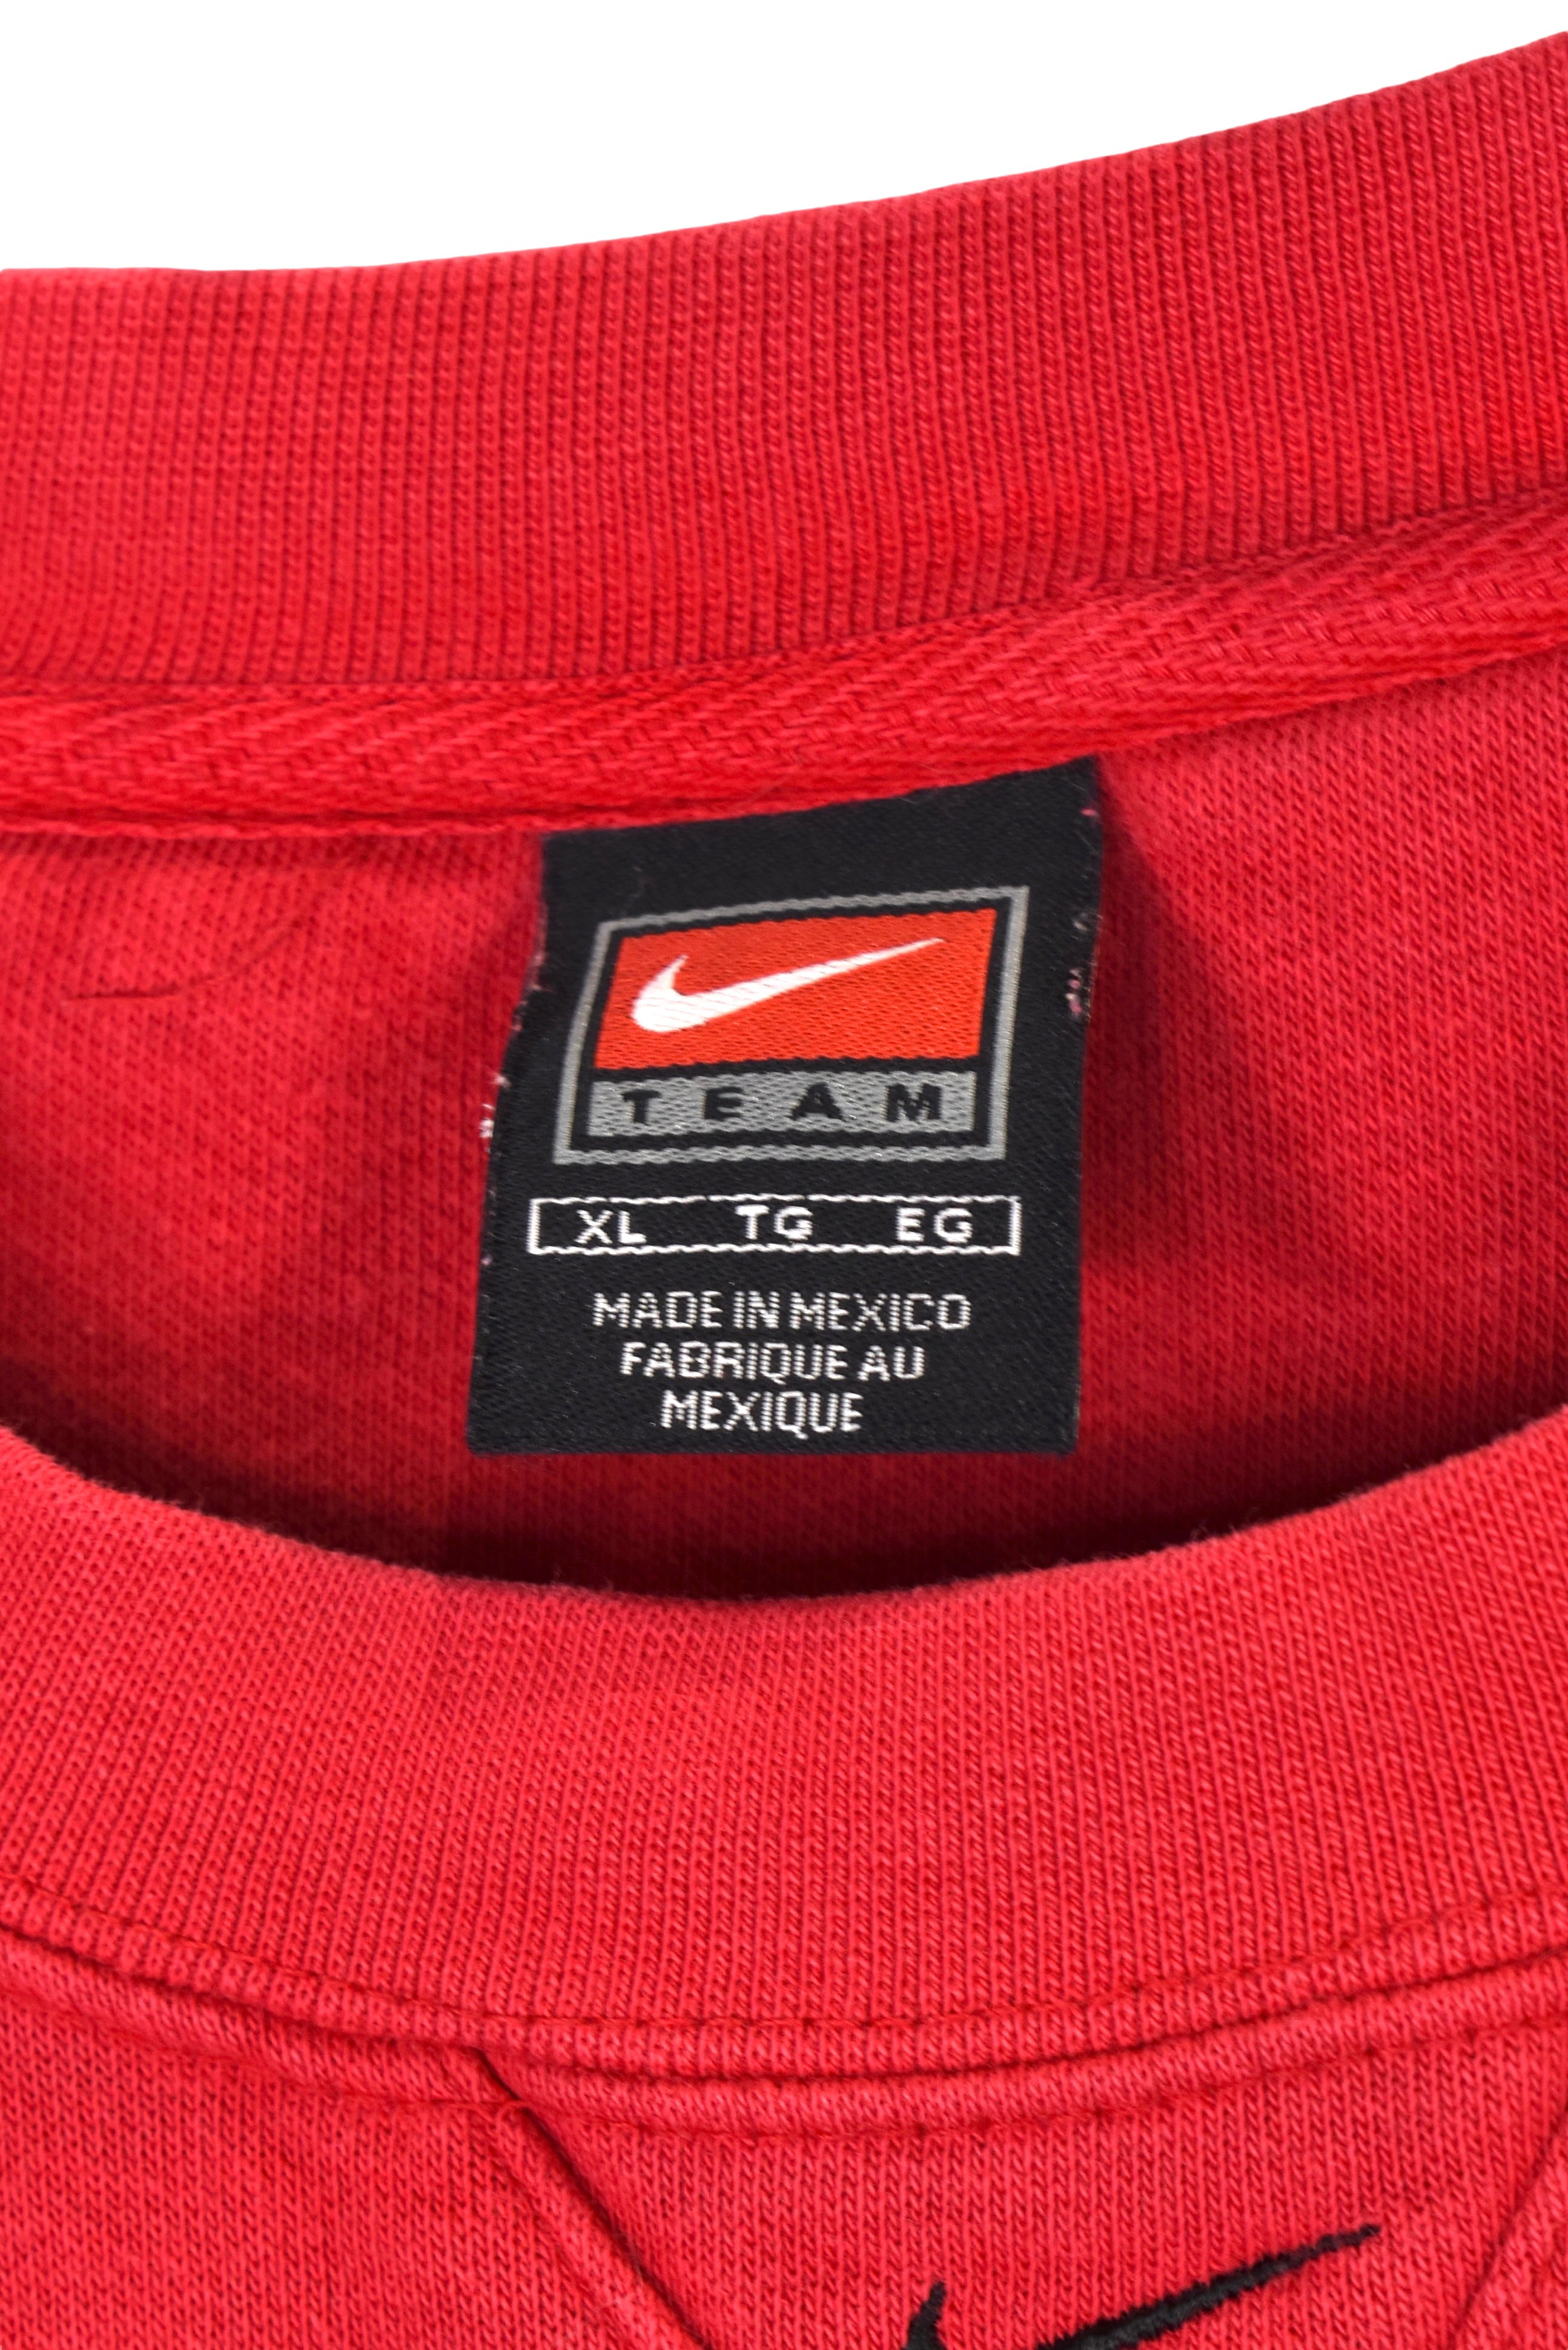 Vintage University of Maryland sweatshirt, red Nike embroidered crewneck - XXL